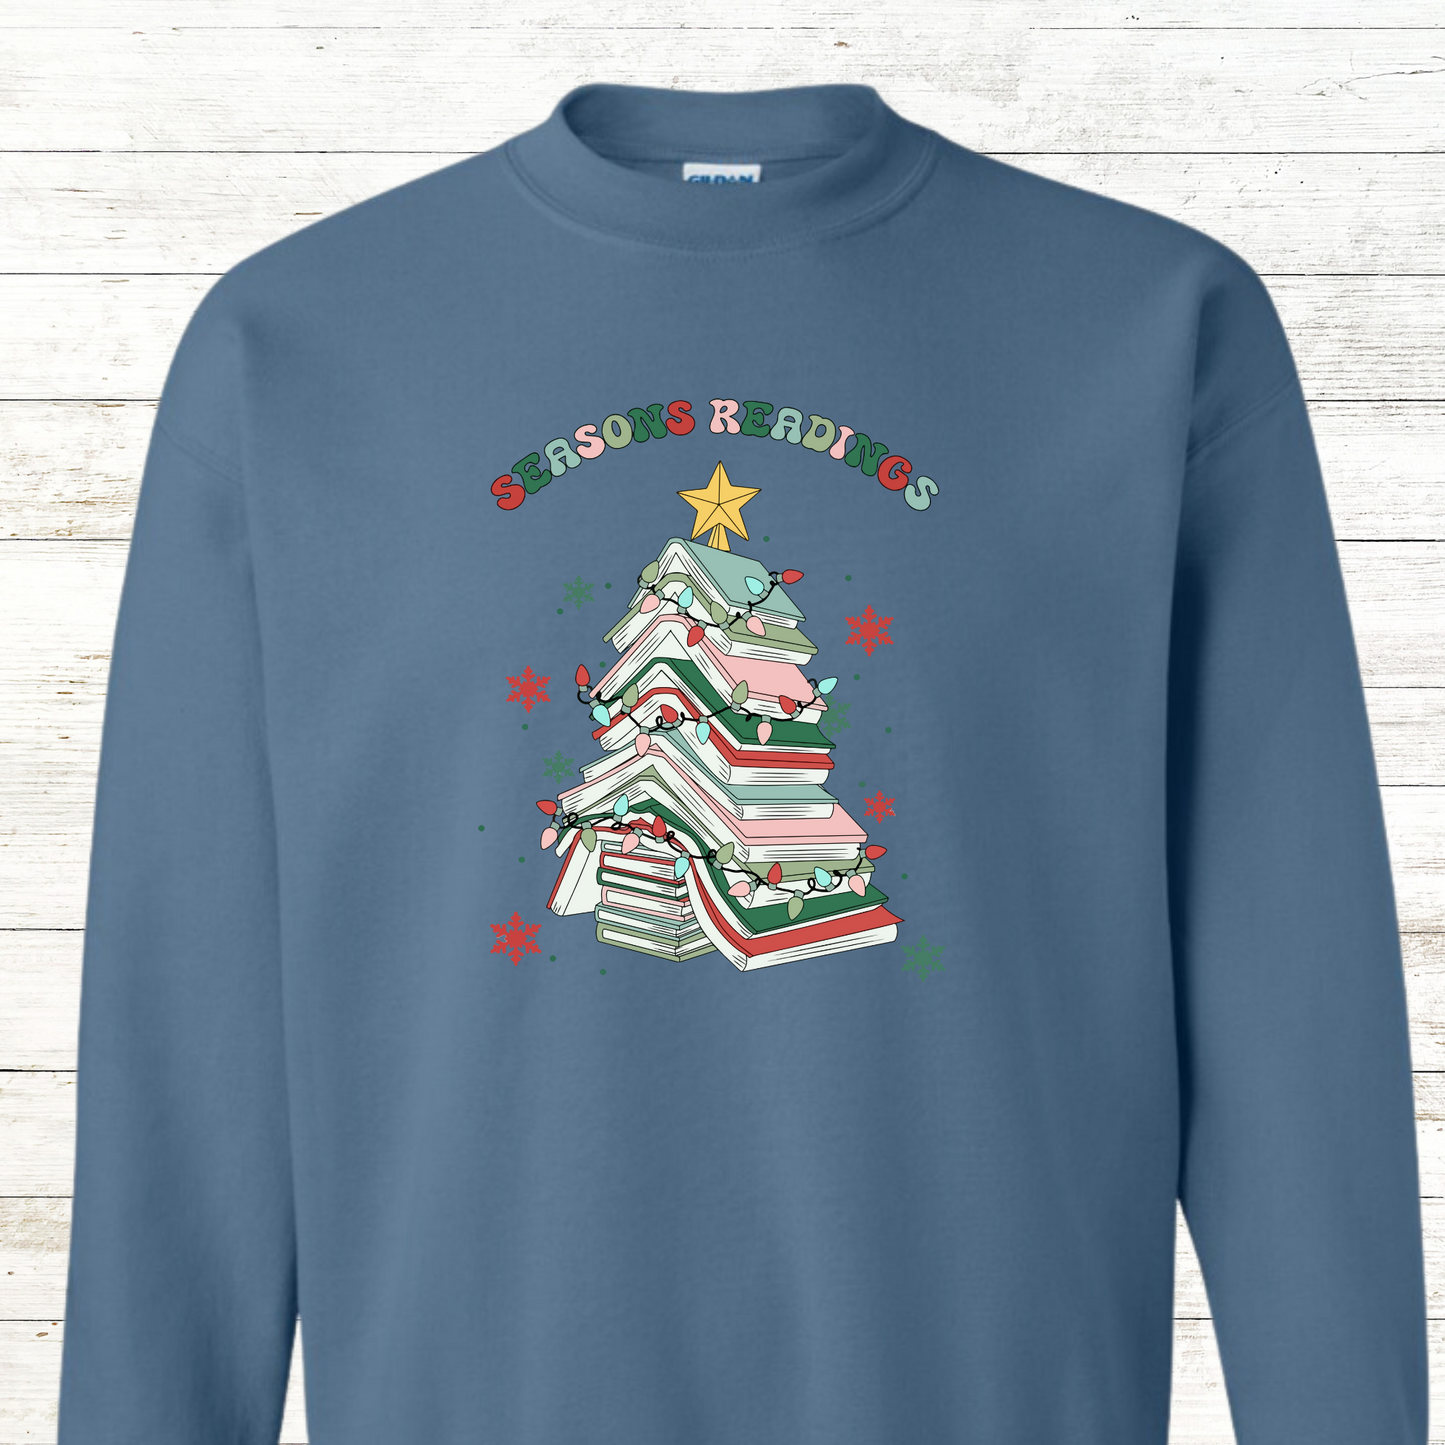 Seasons Reading -  Christmas Teacher / Adult Sweatshirt - Back Personalization Option